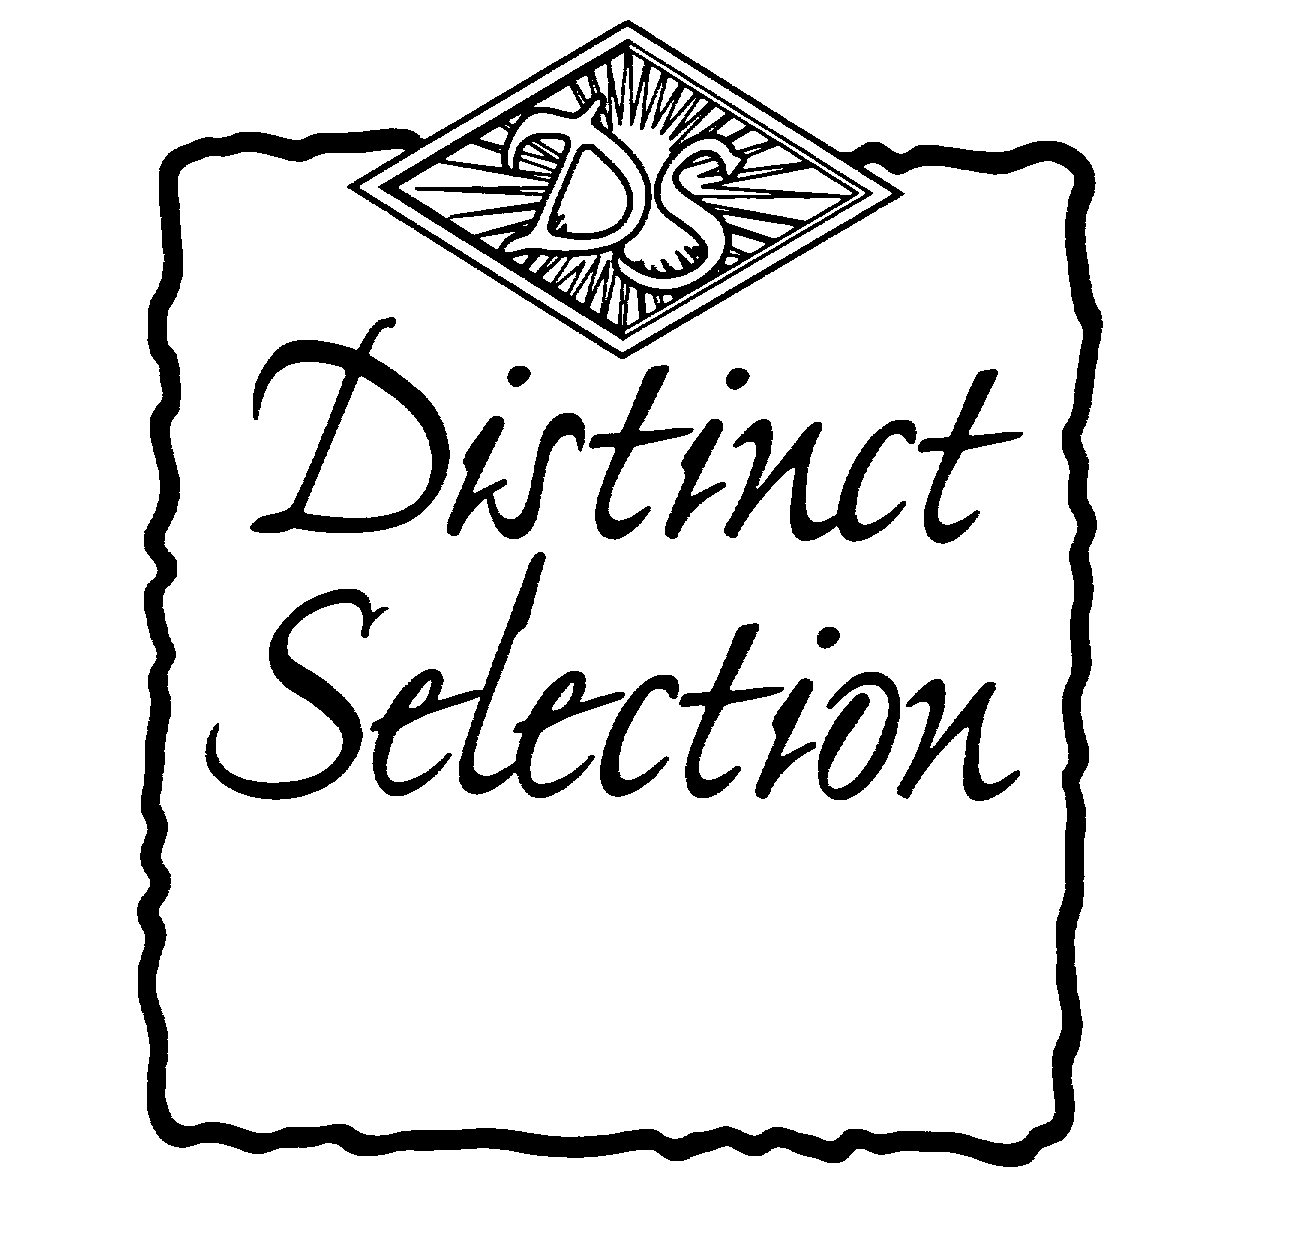  DS DISTINCT SELECTION